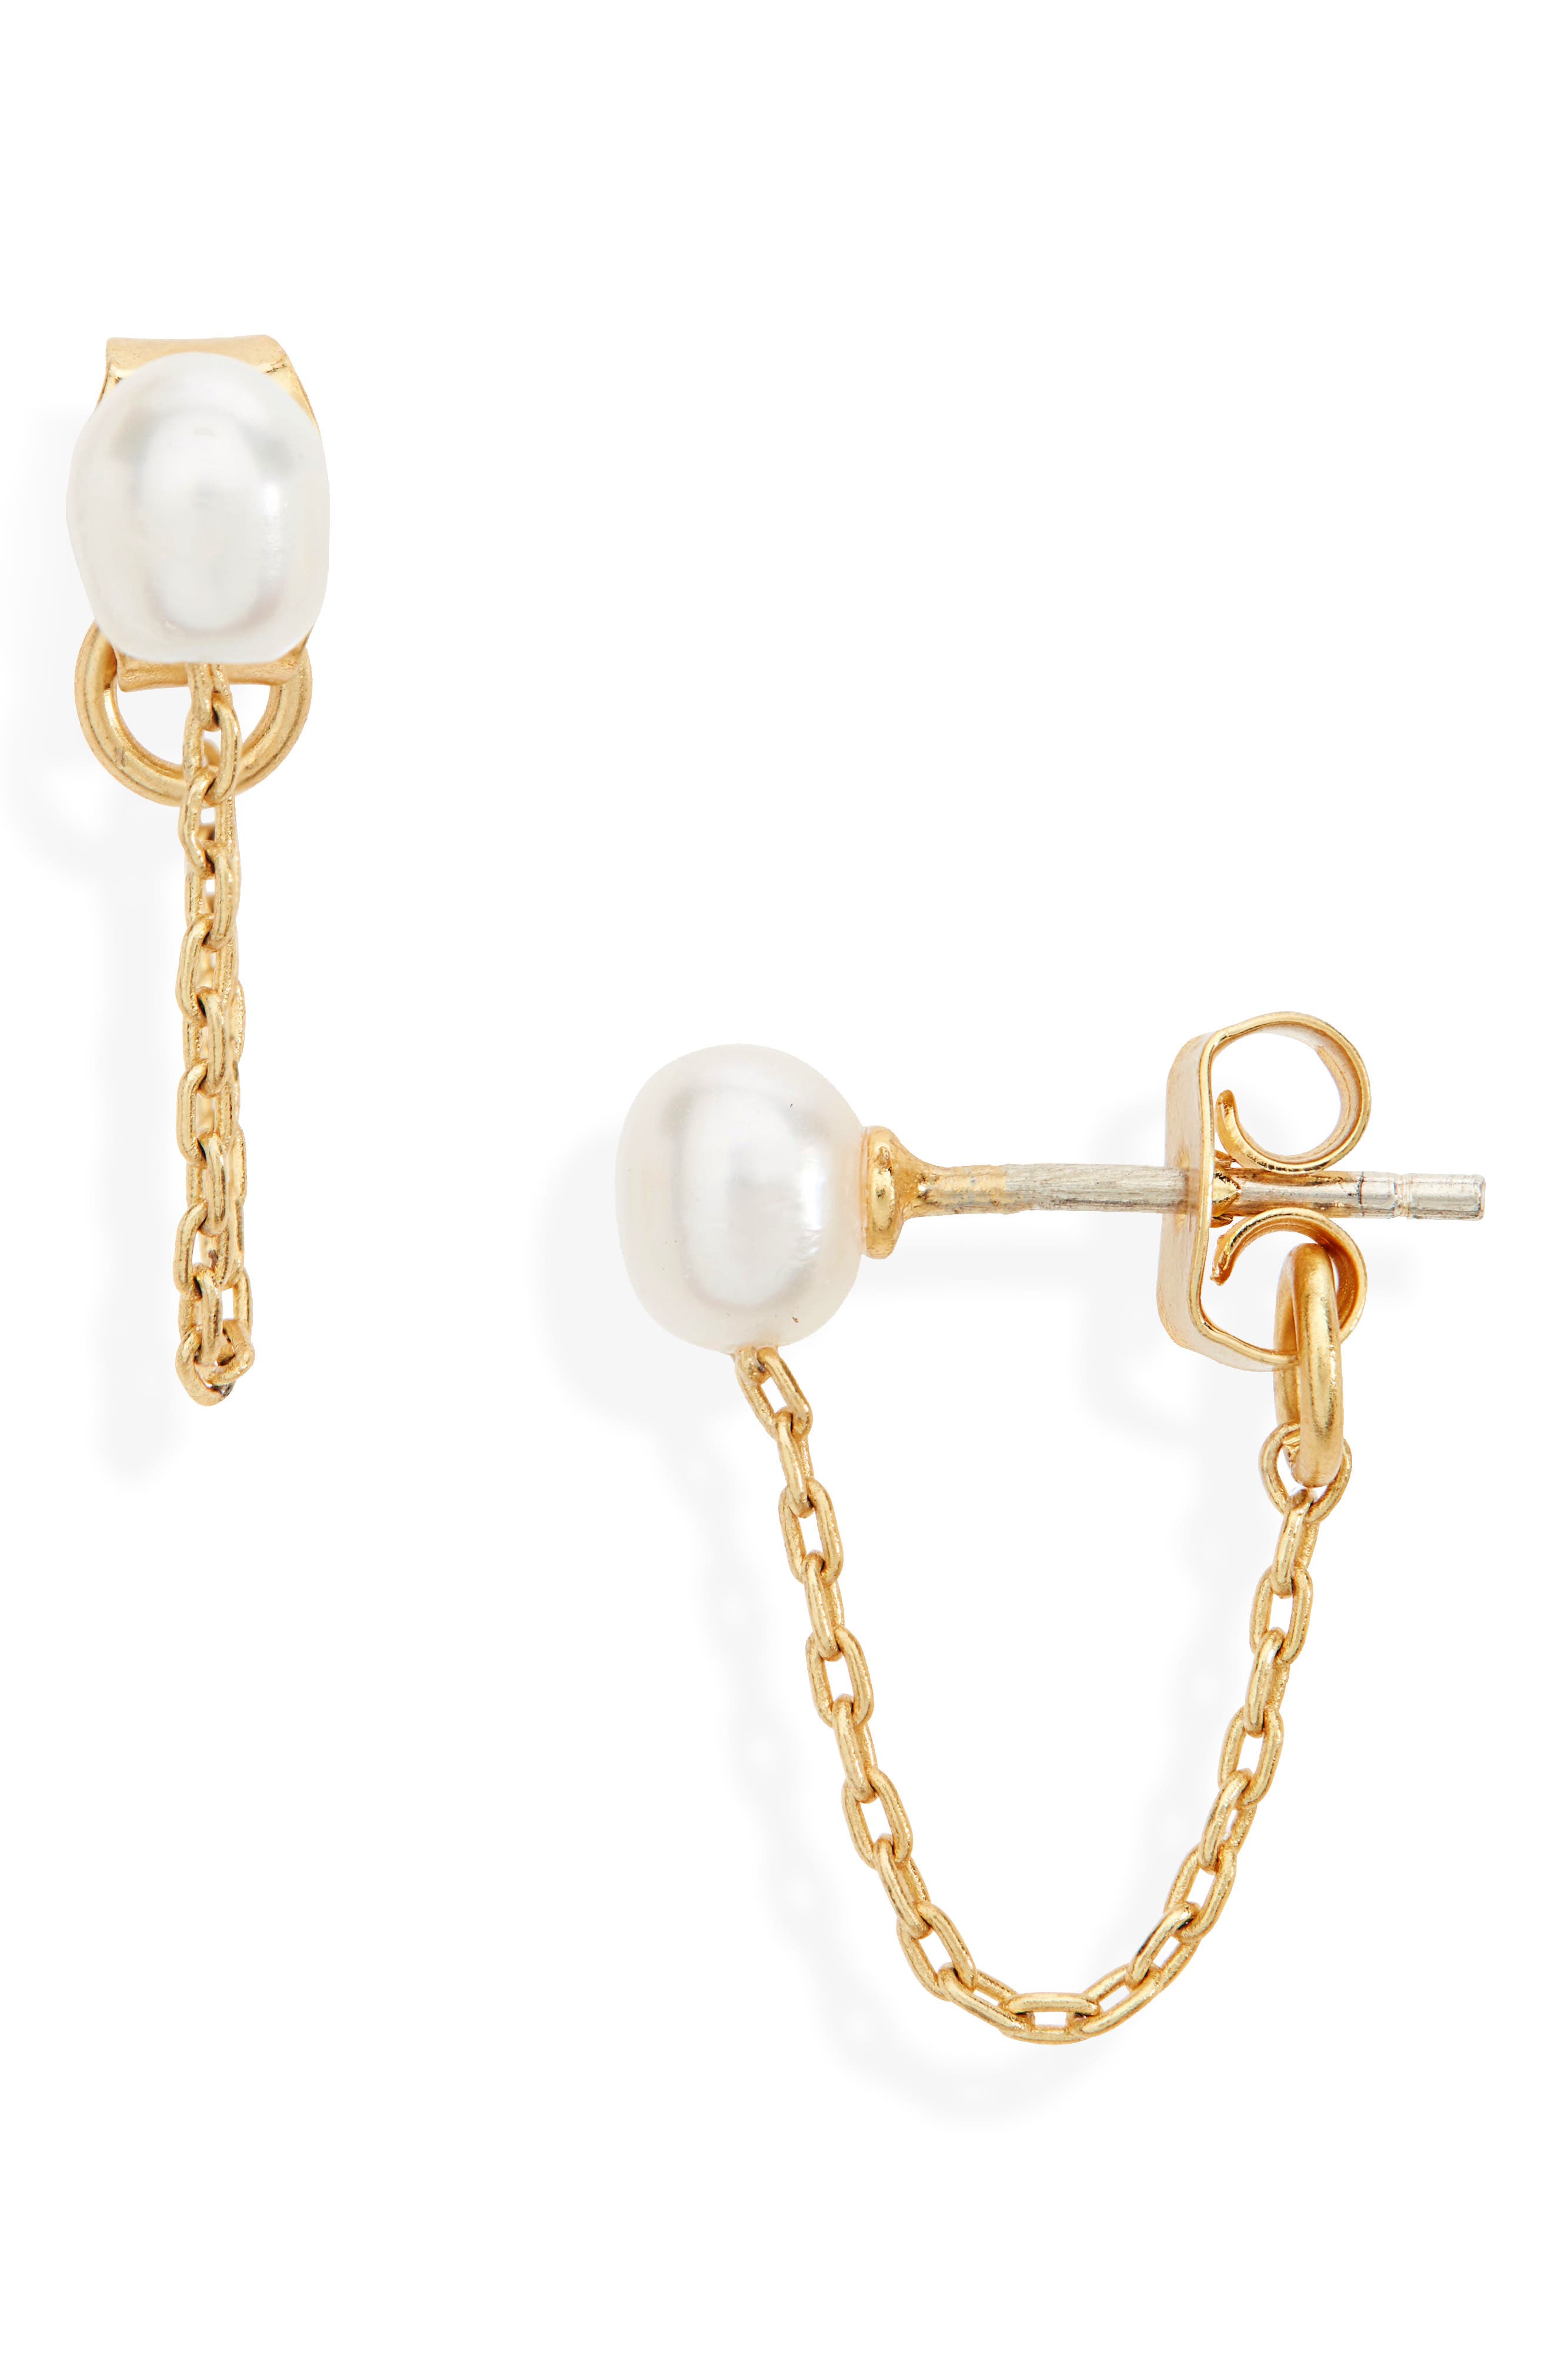 Pearl Beads Women Stud Earrings Acrylic Material Flower Push-Back Ear Accessories 